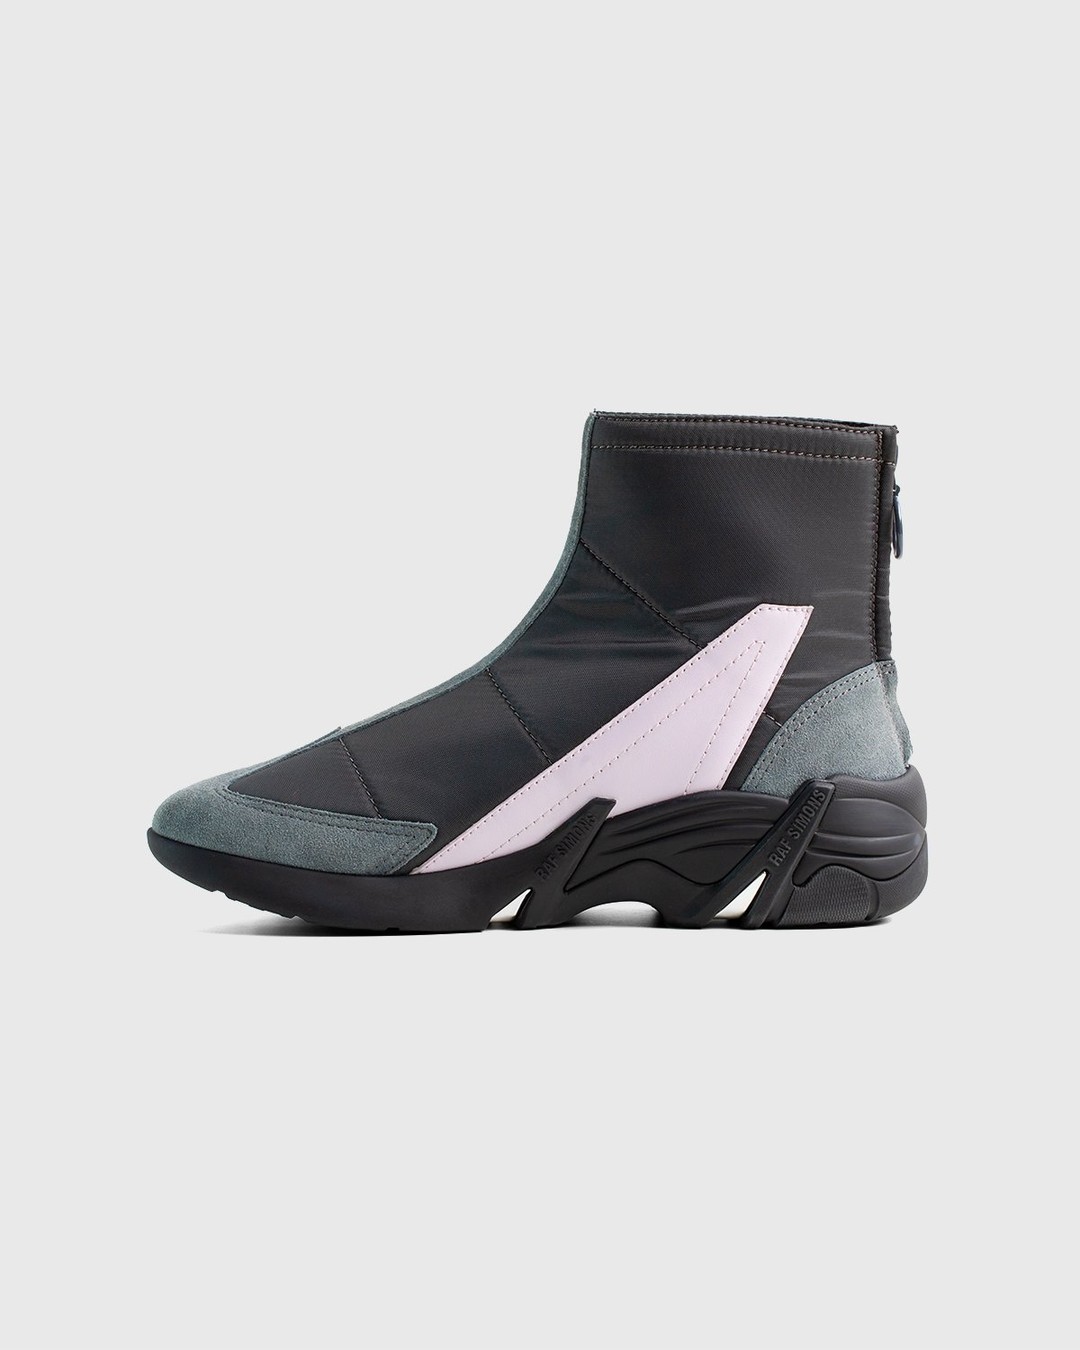 Raf Simons – Cylon 22 Antracite - High Top Sneakers - Grey - Image 6